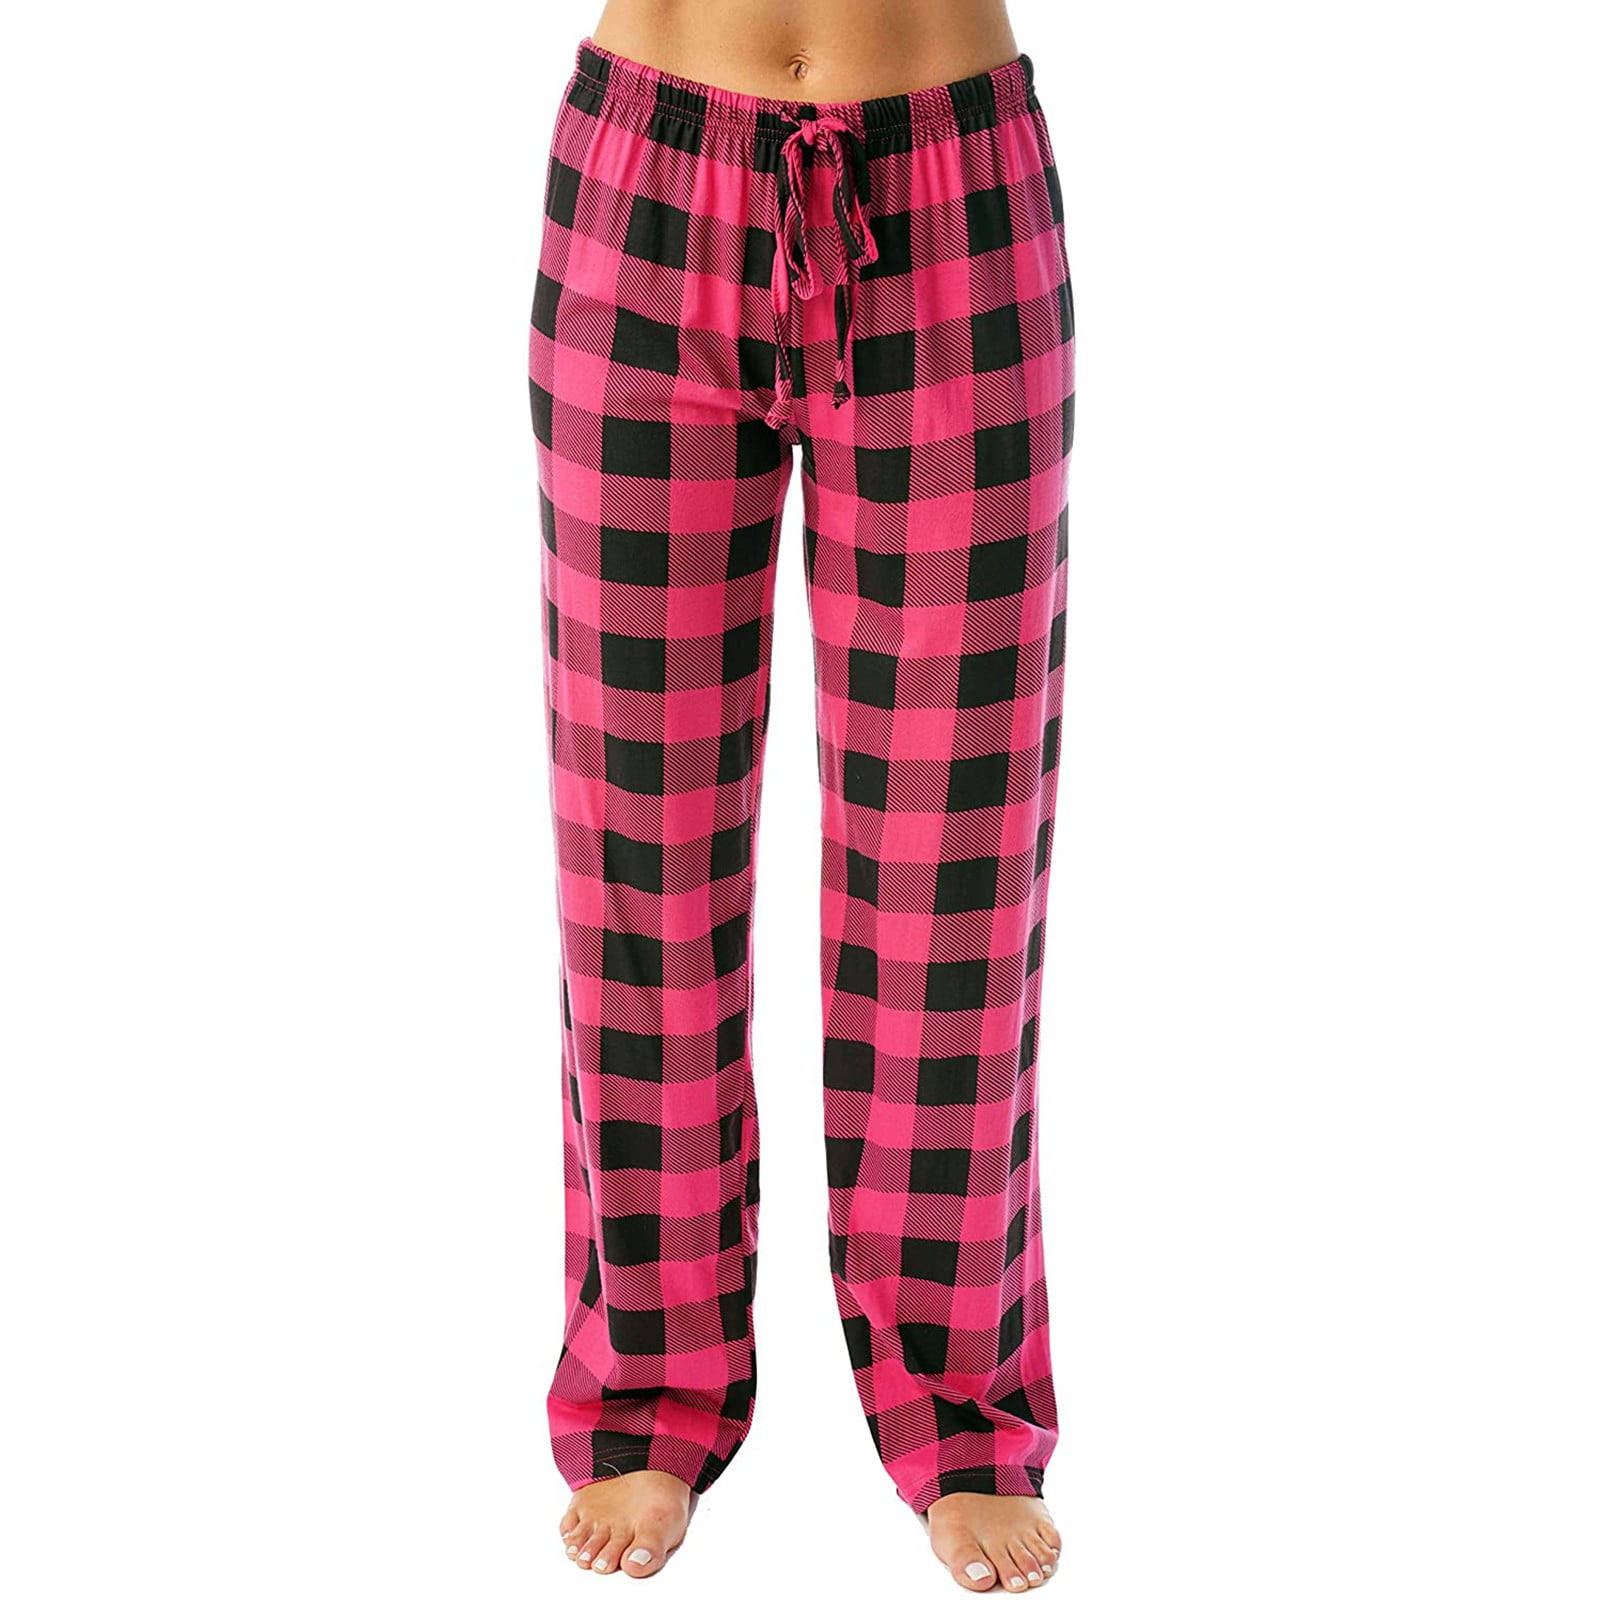 Pajama Pants For Women,Womens Pajama Pants Plaid Pajama Pants Red And Black Pajama  Pants Comfortable Pants For Women Womens Sleepwear Pants Womens Pjamajam Pants  Plaid Pants 